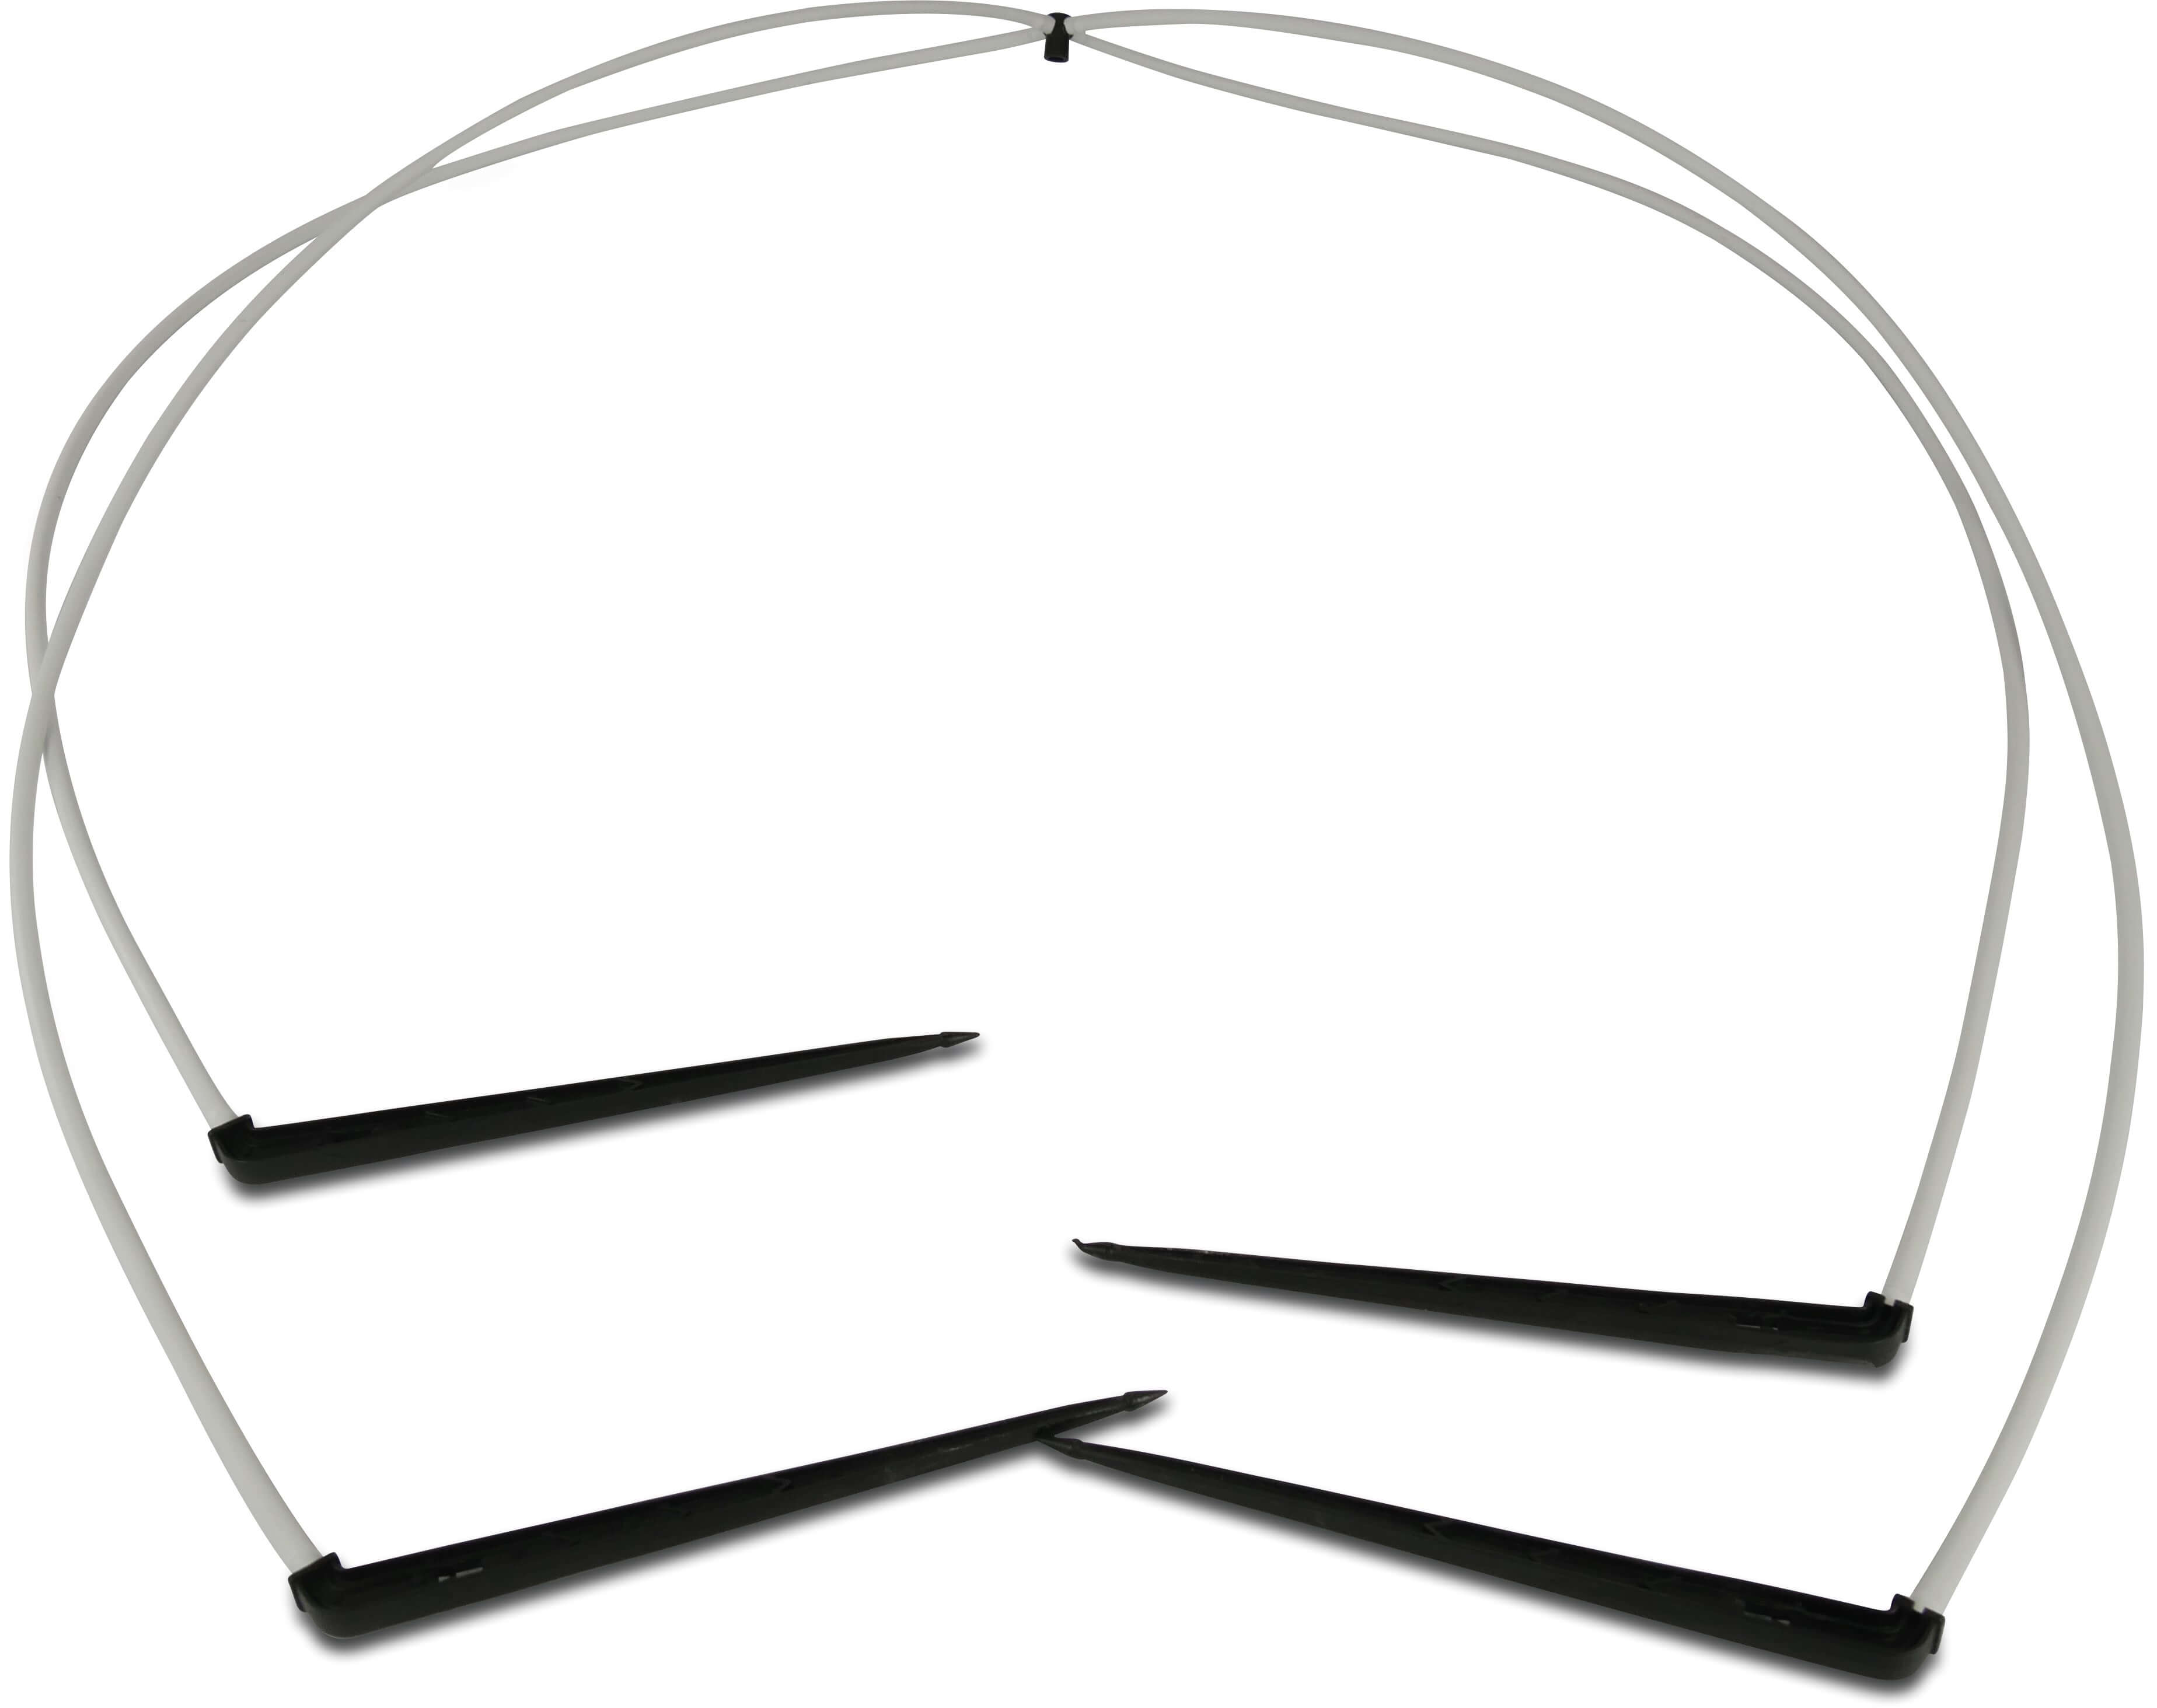 NaanDanJain 4-vägs förgrening plast konisk F 50cm svart/vit type Click Tif, tubing with angle labyrinth stake